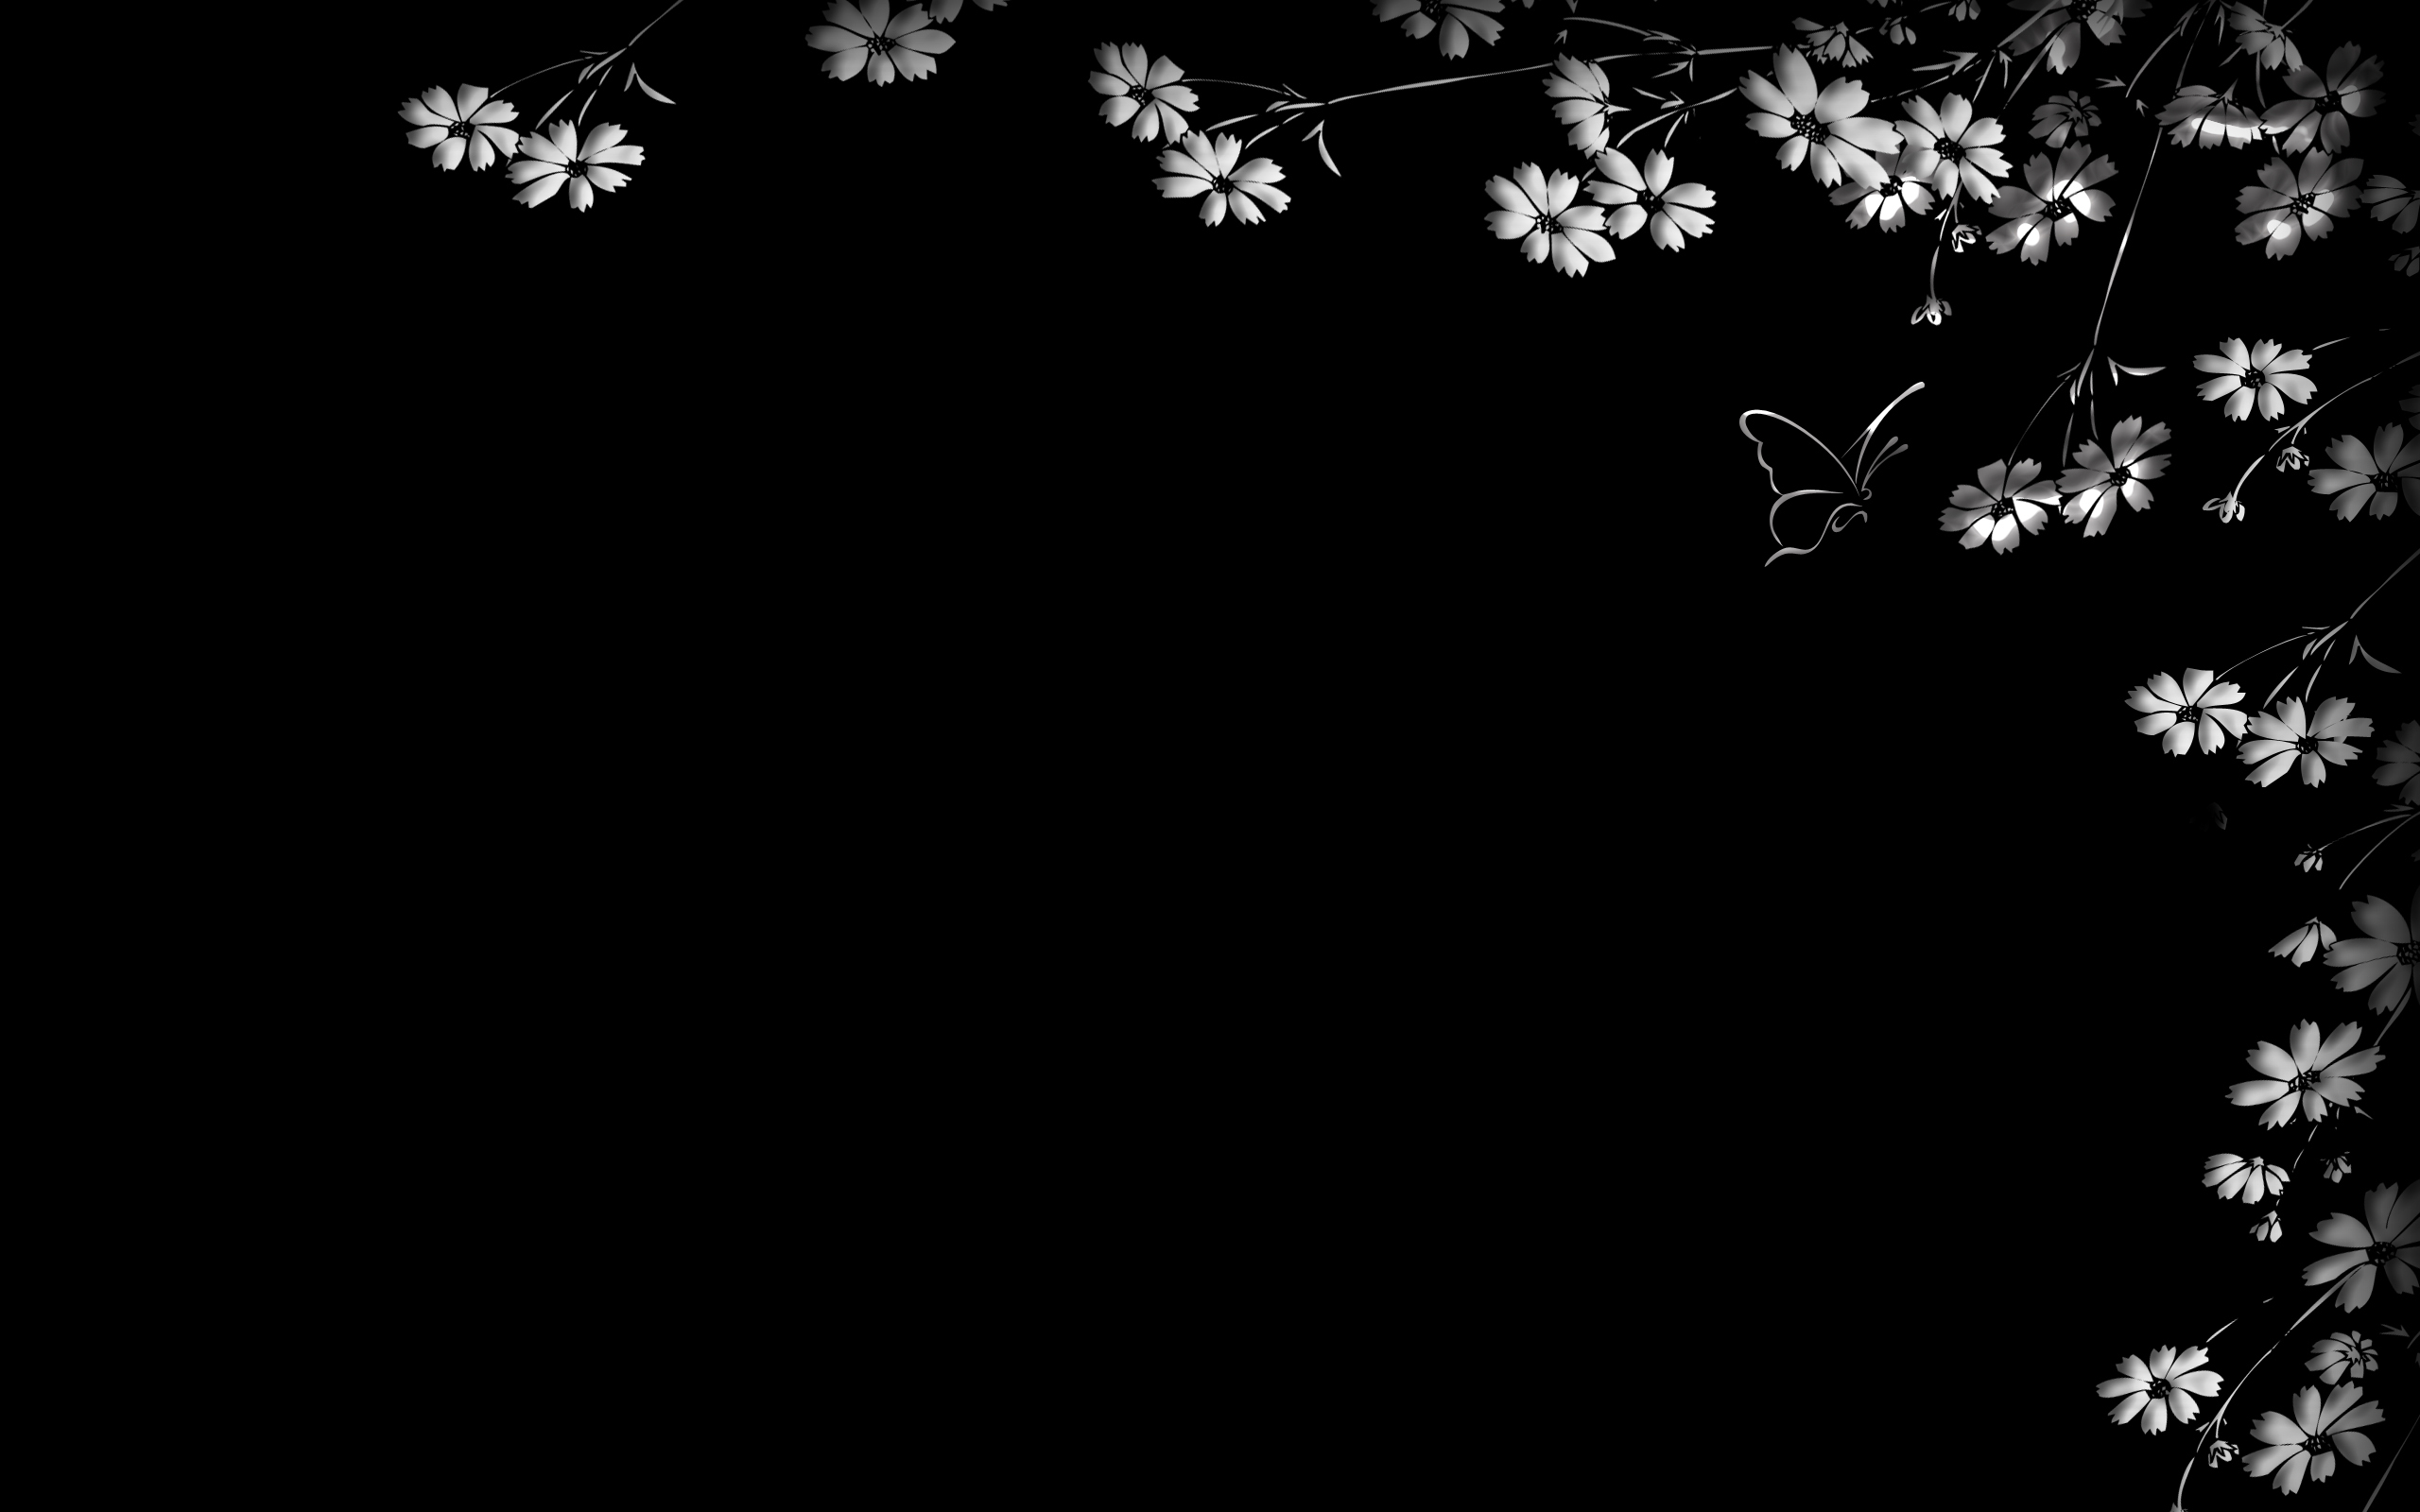 48+] Flowers on Black Background Wallpaper - WallpaperSafari